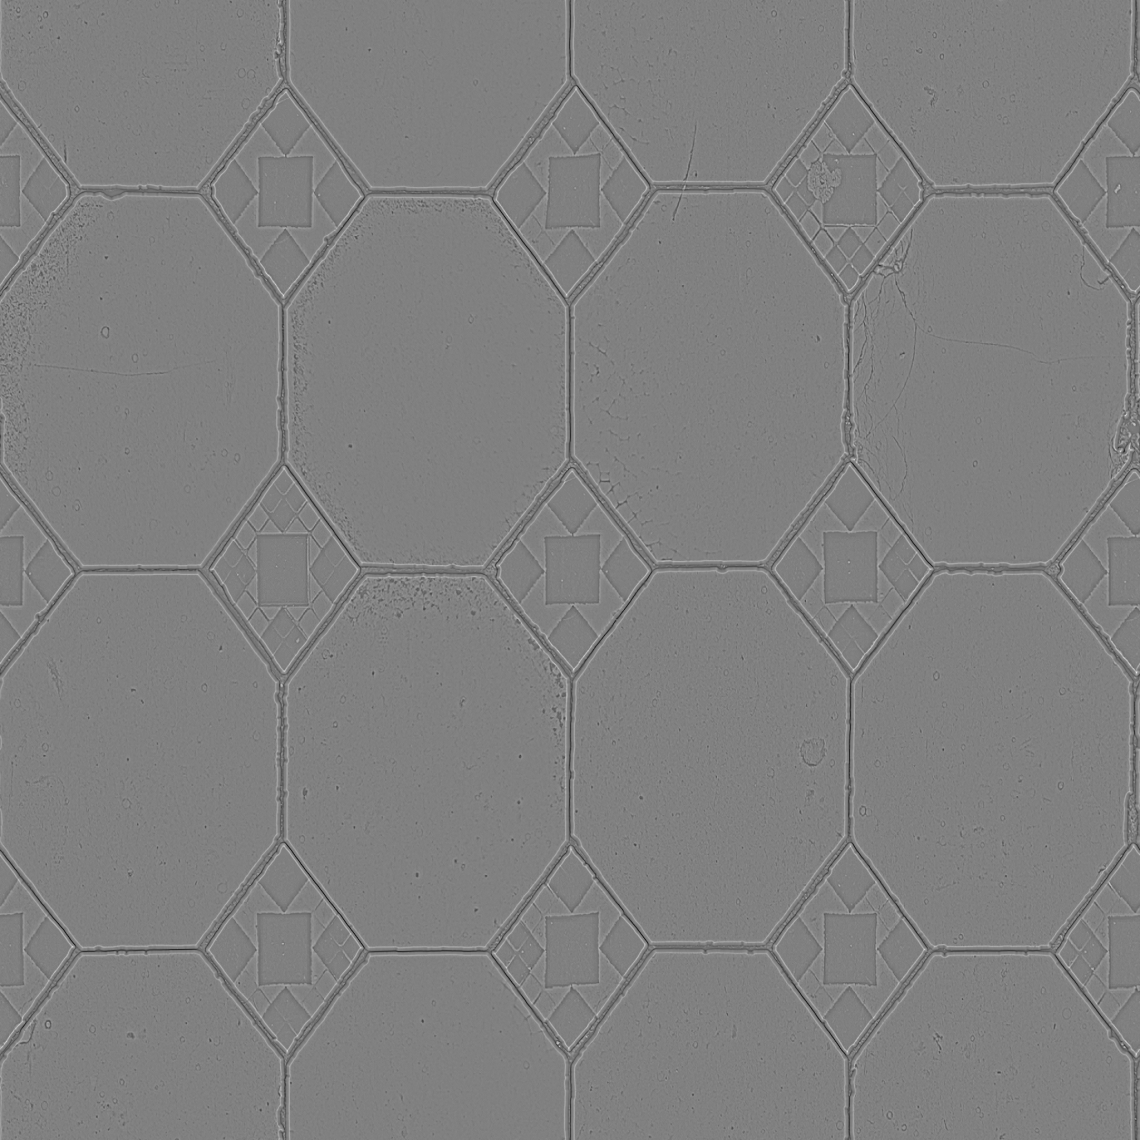 Ornate-Tiles-02-Curvature - Seamless